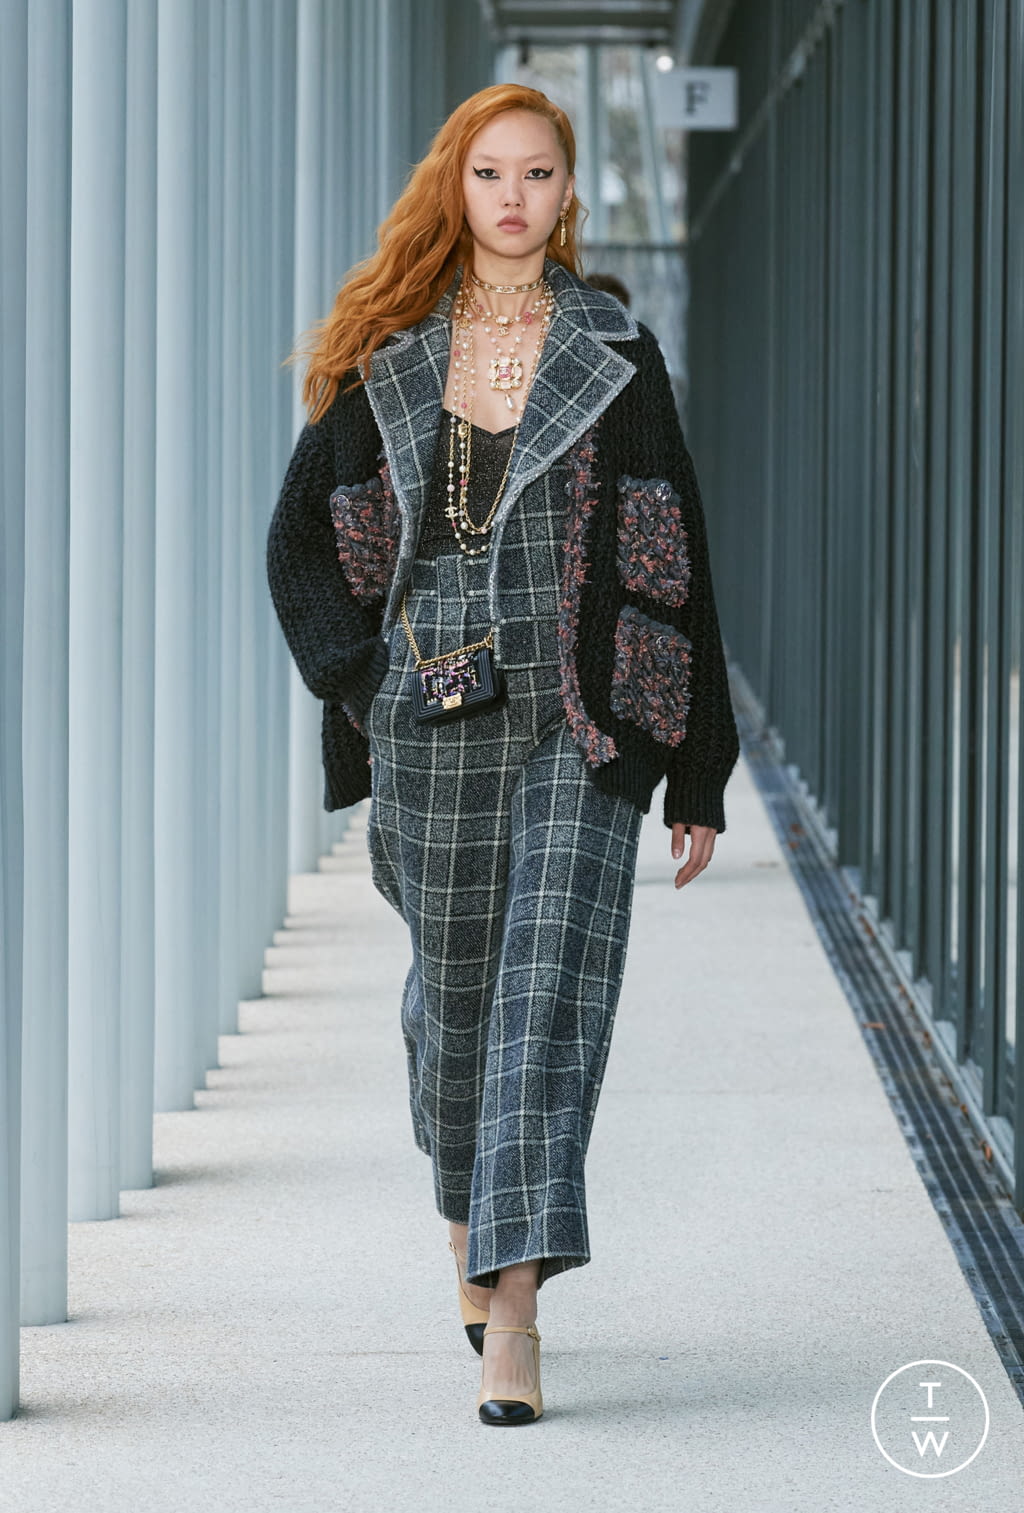 Chanel Métiers d'Art PF22 womenswear #21 - Tagwalk: The Fashion